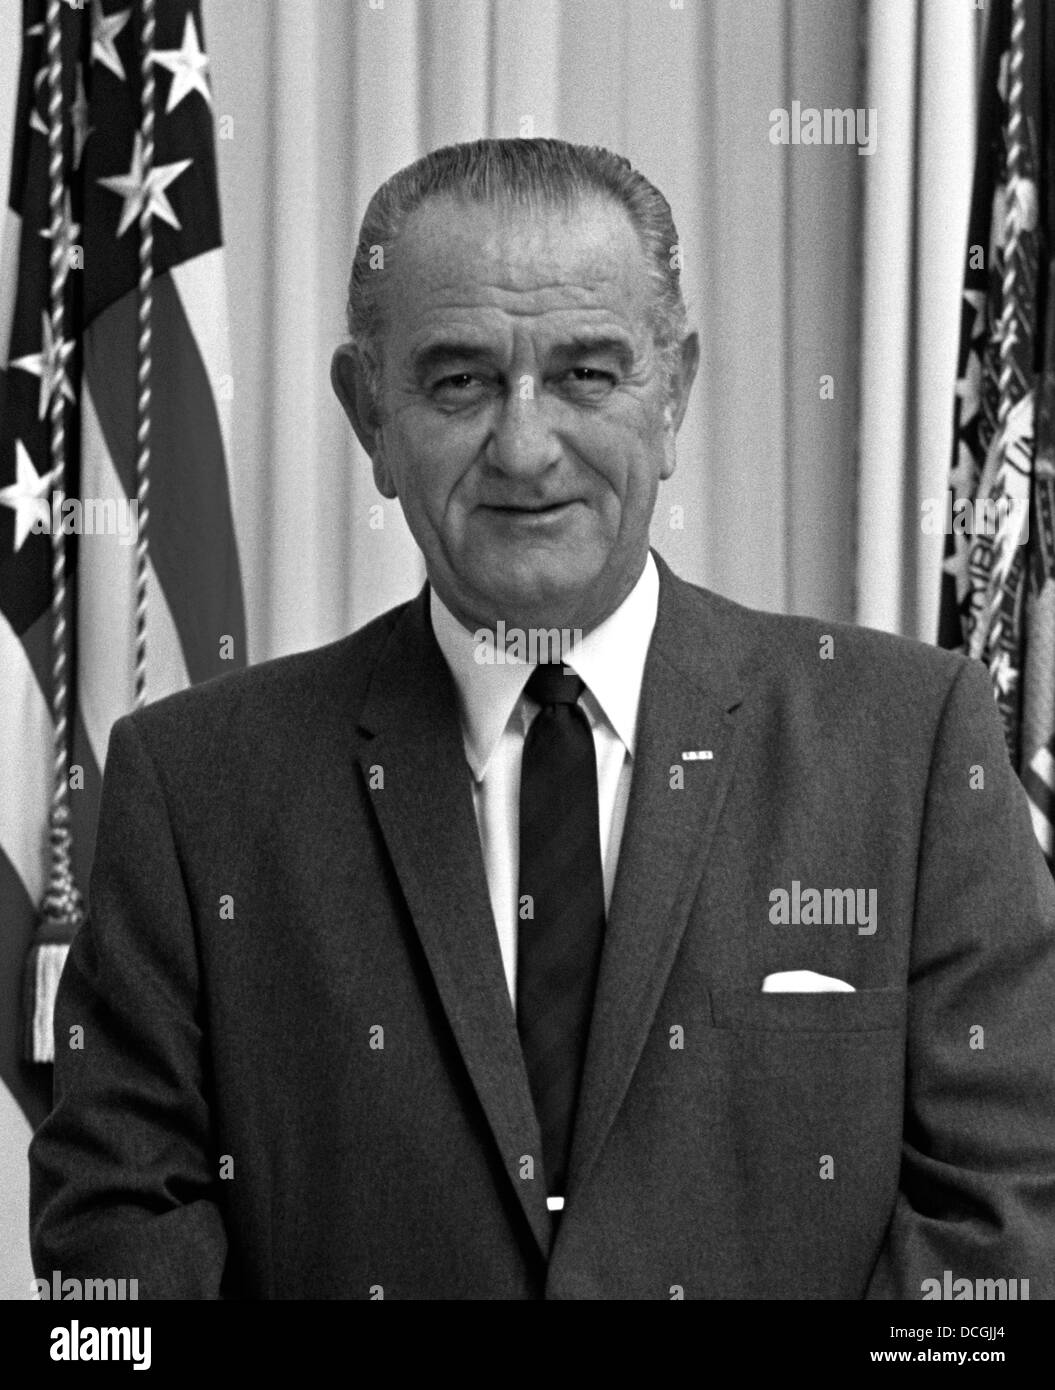 Digitally restored American history photo of President Lyndon Baines Johnson standing by the U.S. Flag. Stock Photo